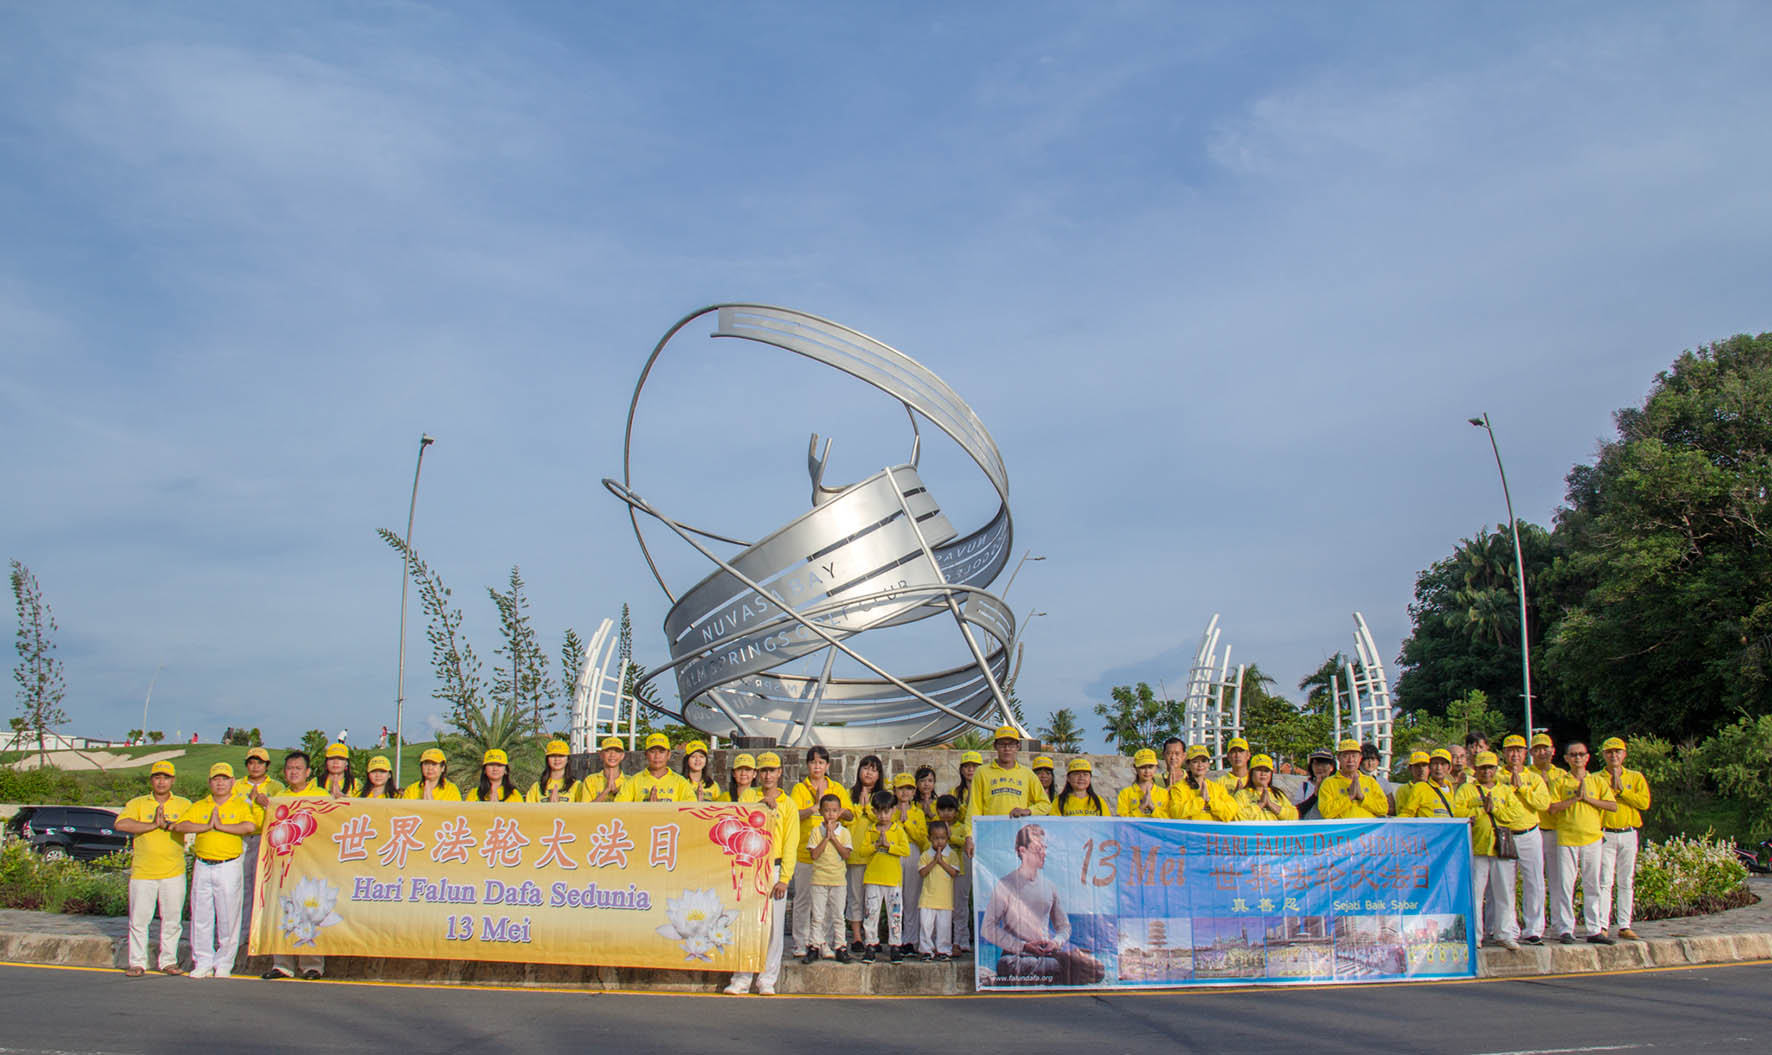 Image for article Batam: Parade Mobil Keliling Kota, Merayakan Hari Falun Dafa Sedunia